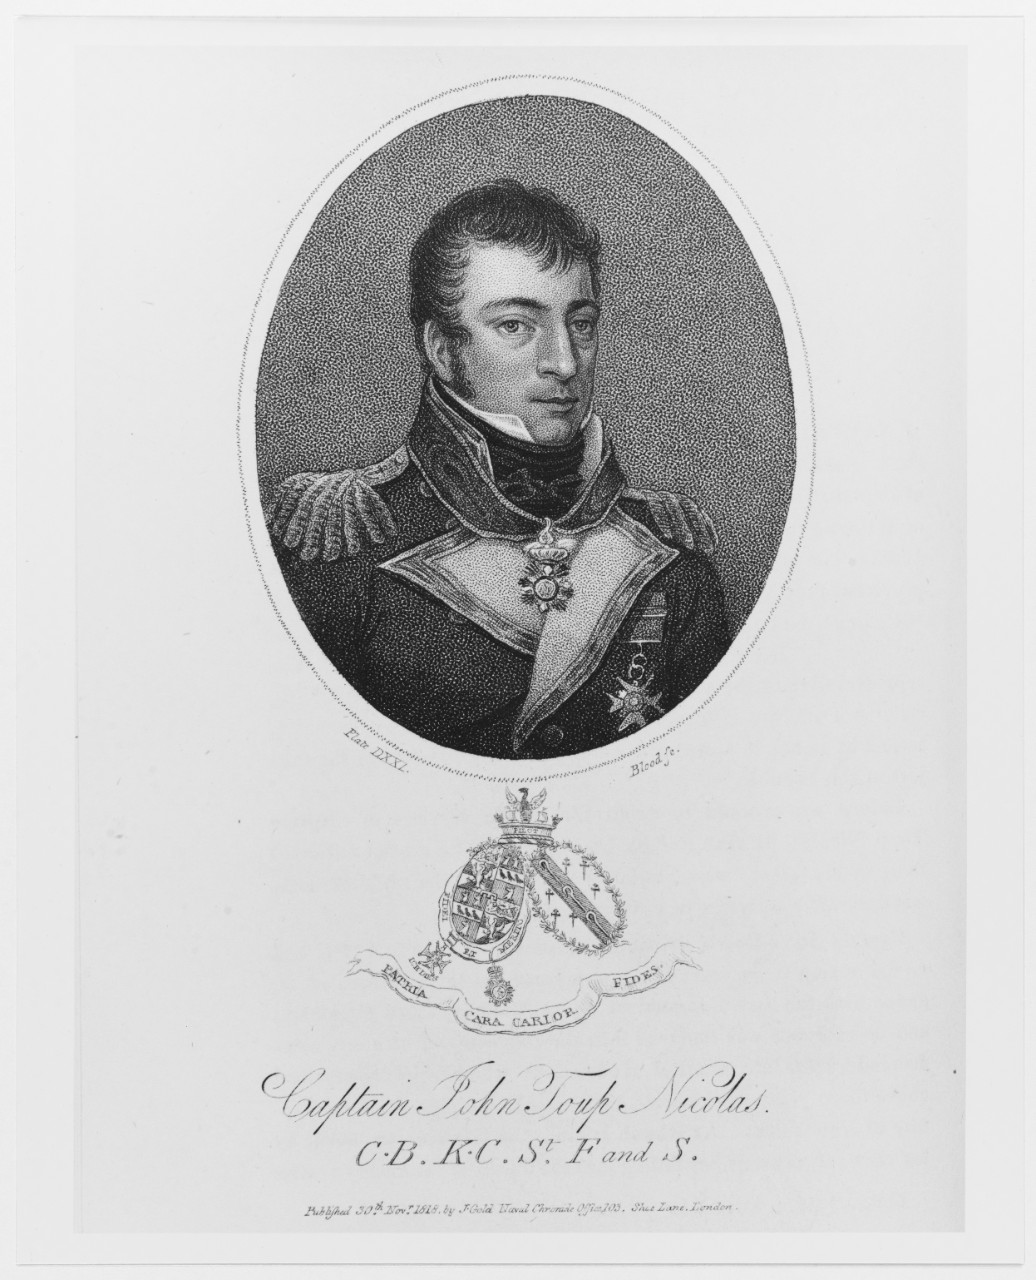 Engraving of Captain John Toup Nicolas, R.N. (1788-18--?), British Naval Officer